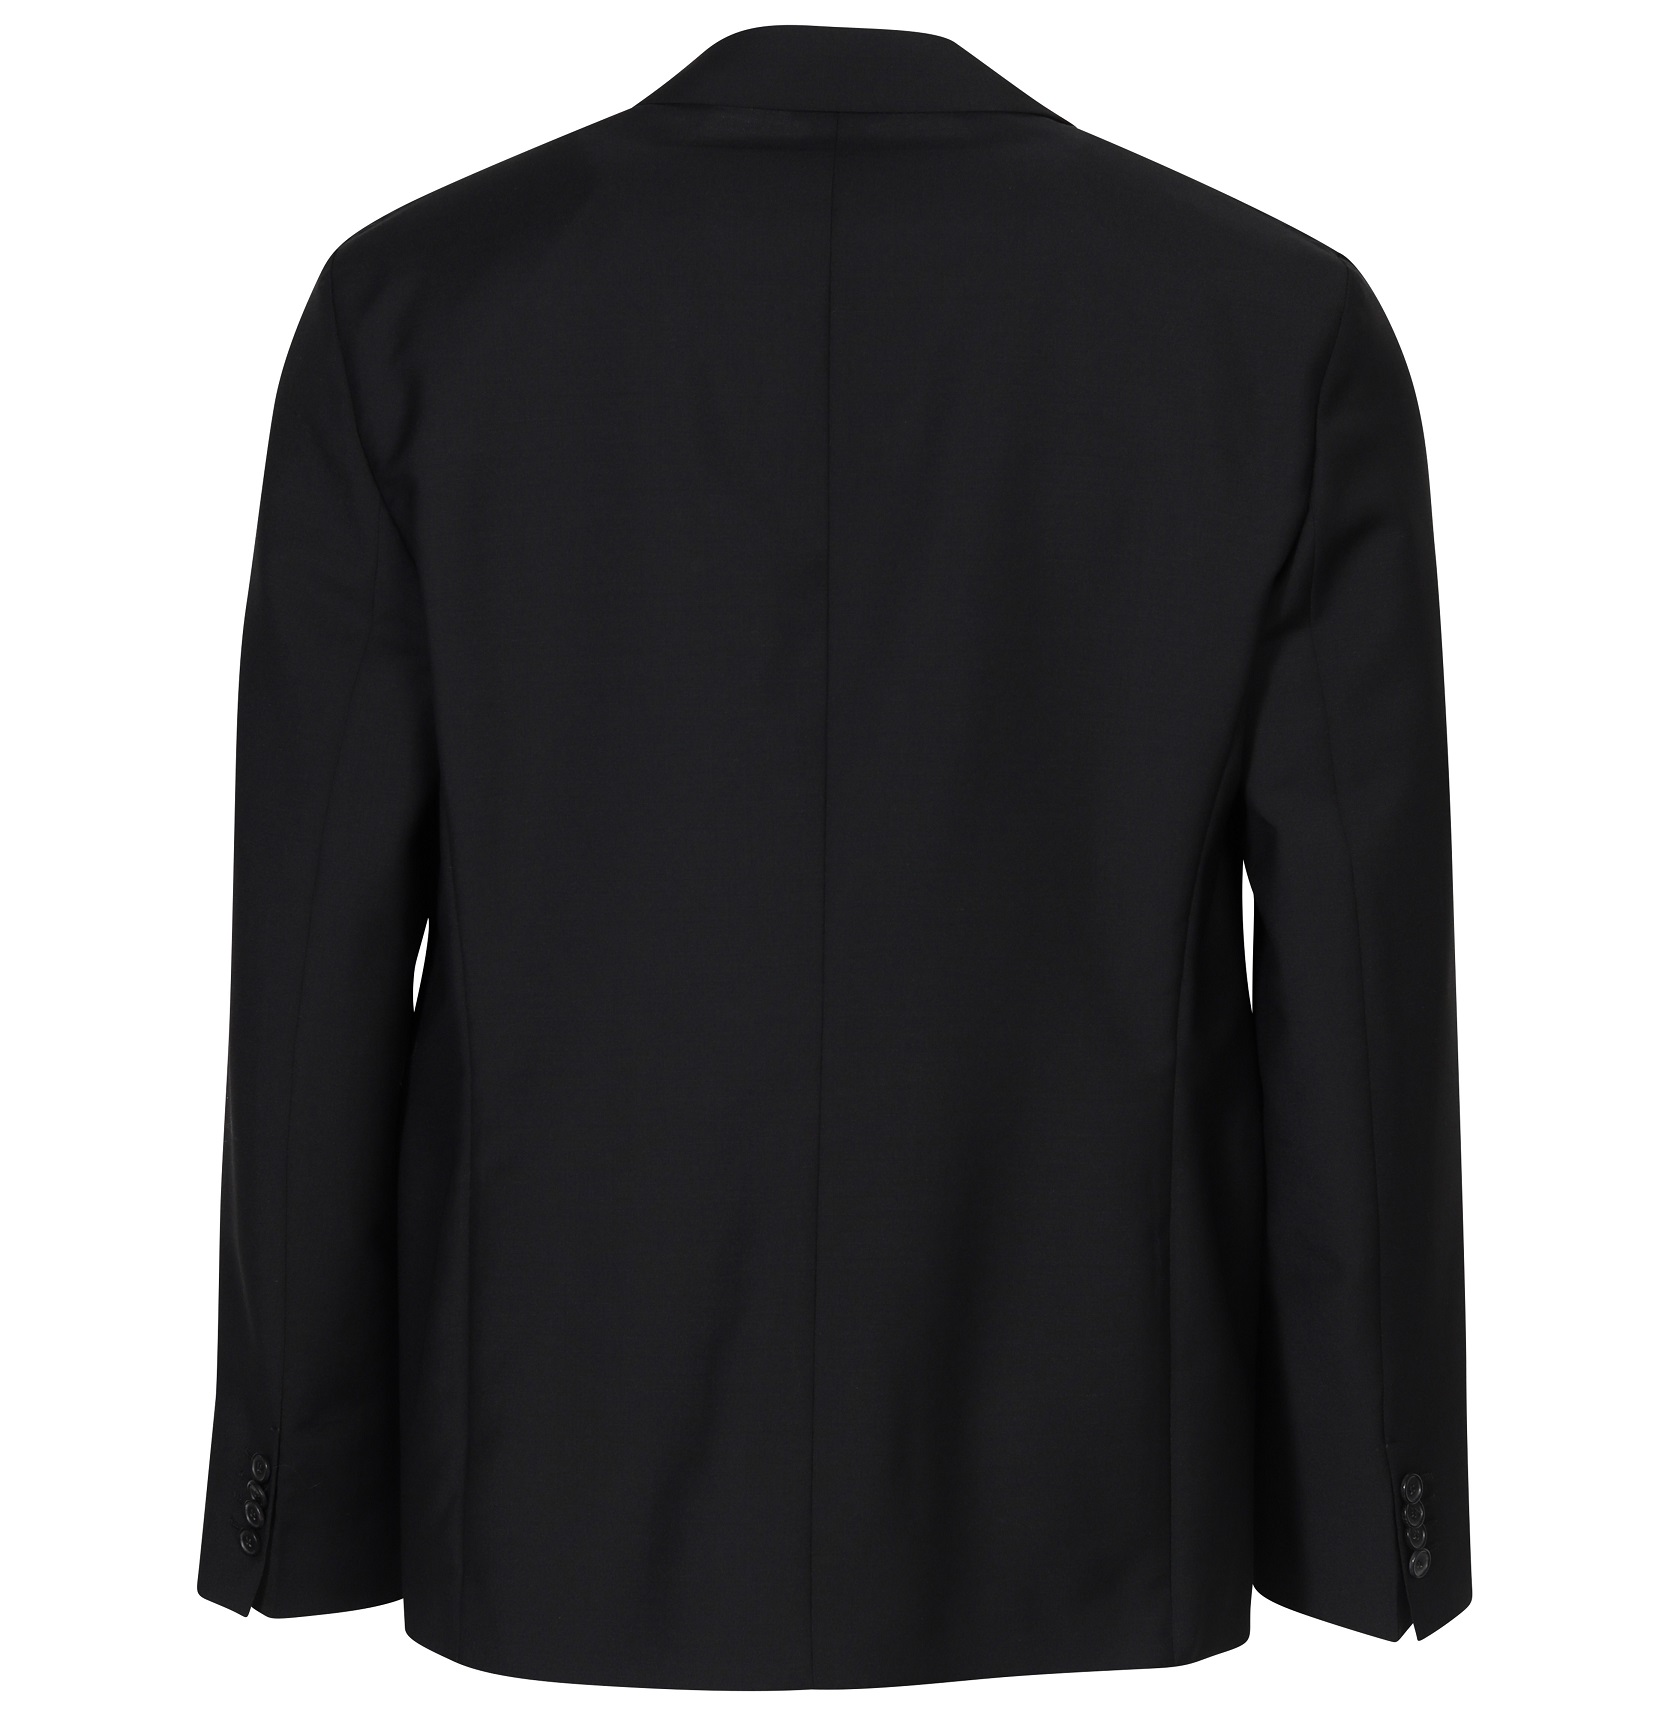 ACNE STUDIOS Suit Jacket in Black 46